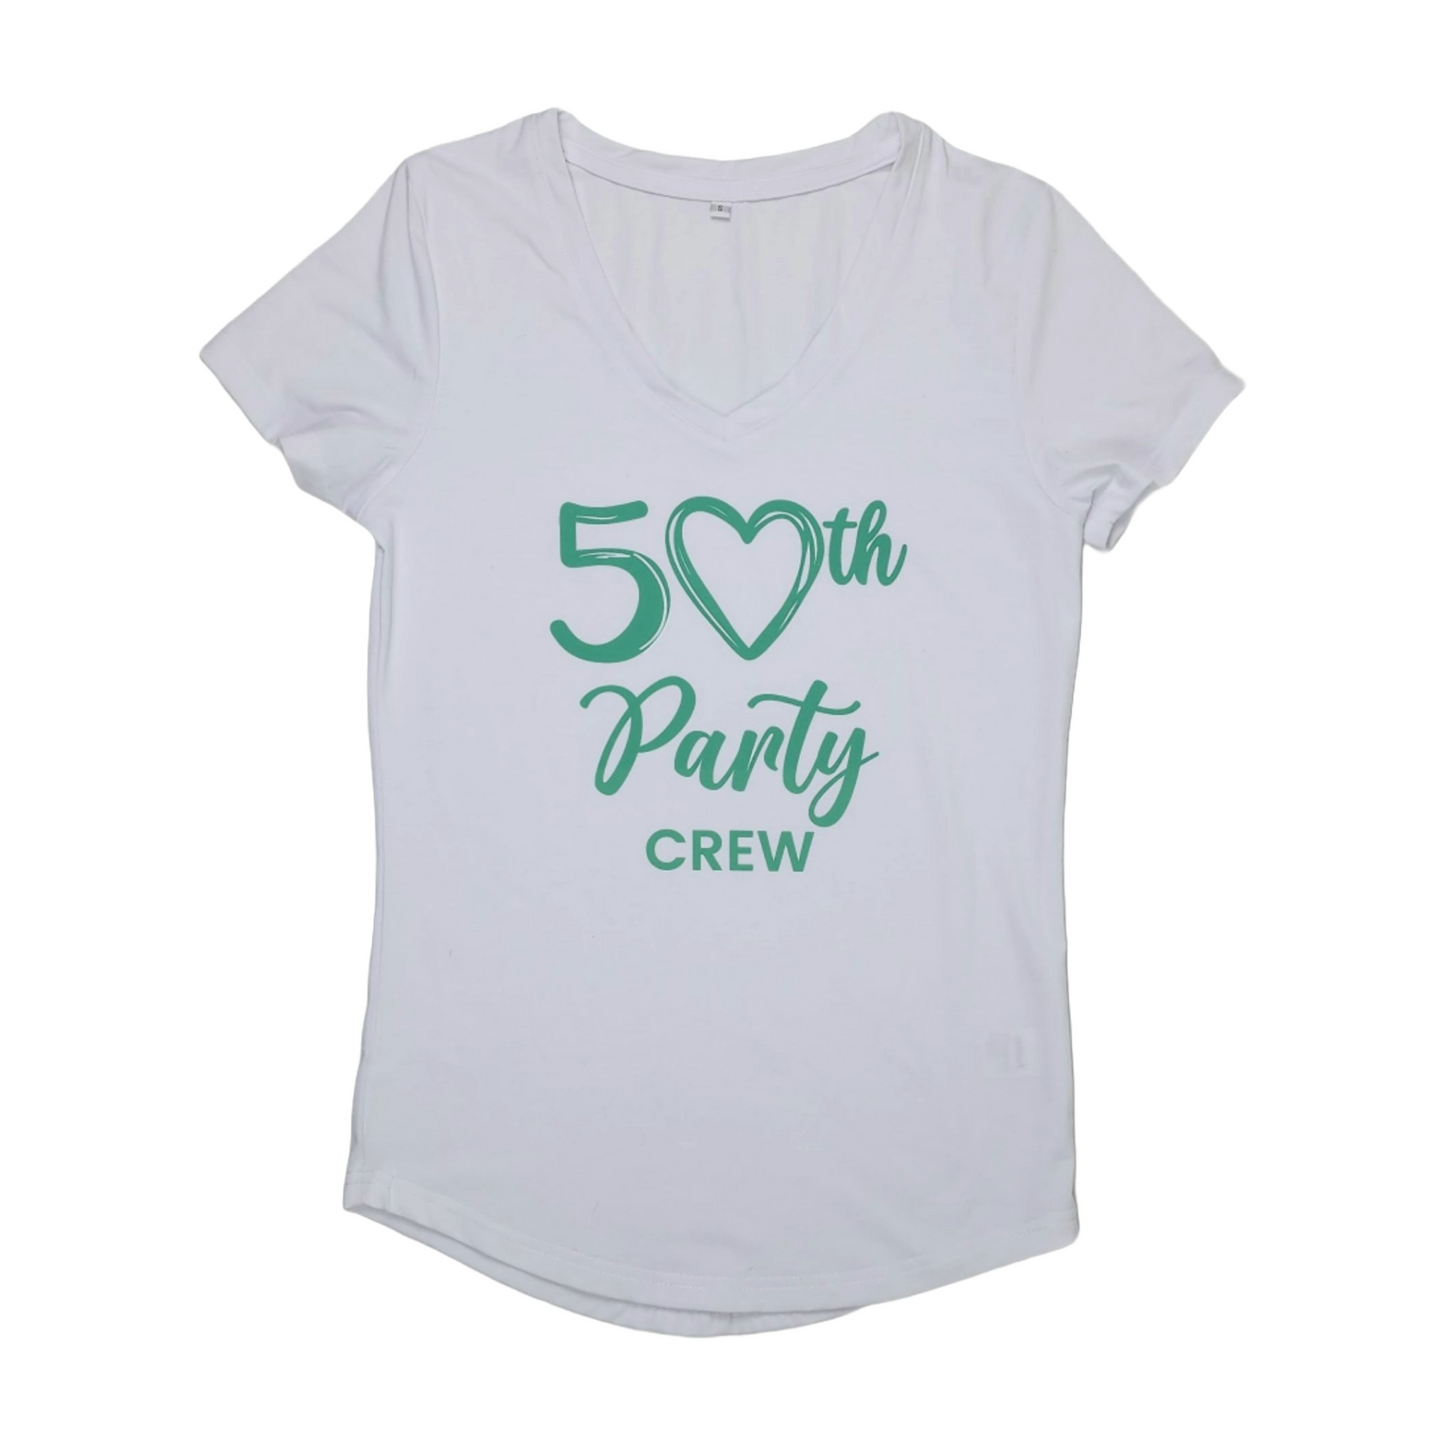 Ladies Short Sleeve V Neck "50th Birthday Party Crew" Tee Shirt